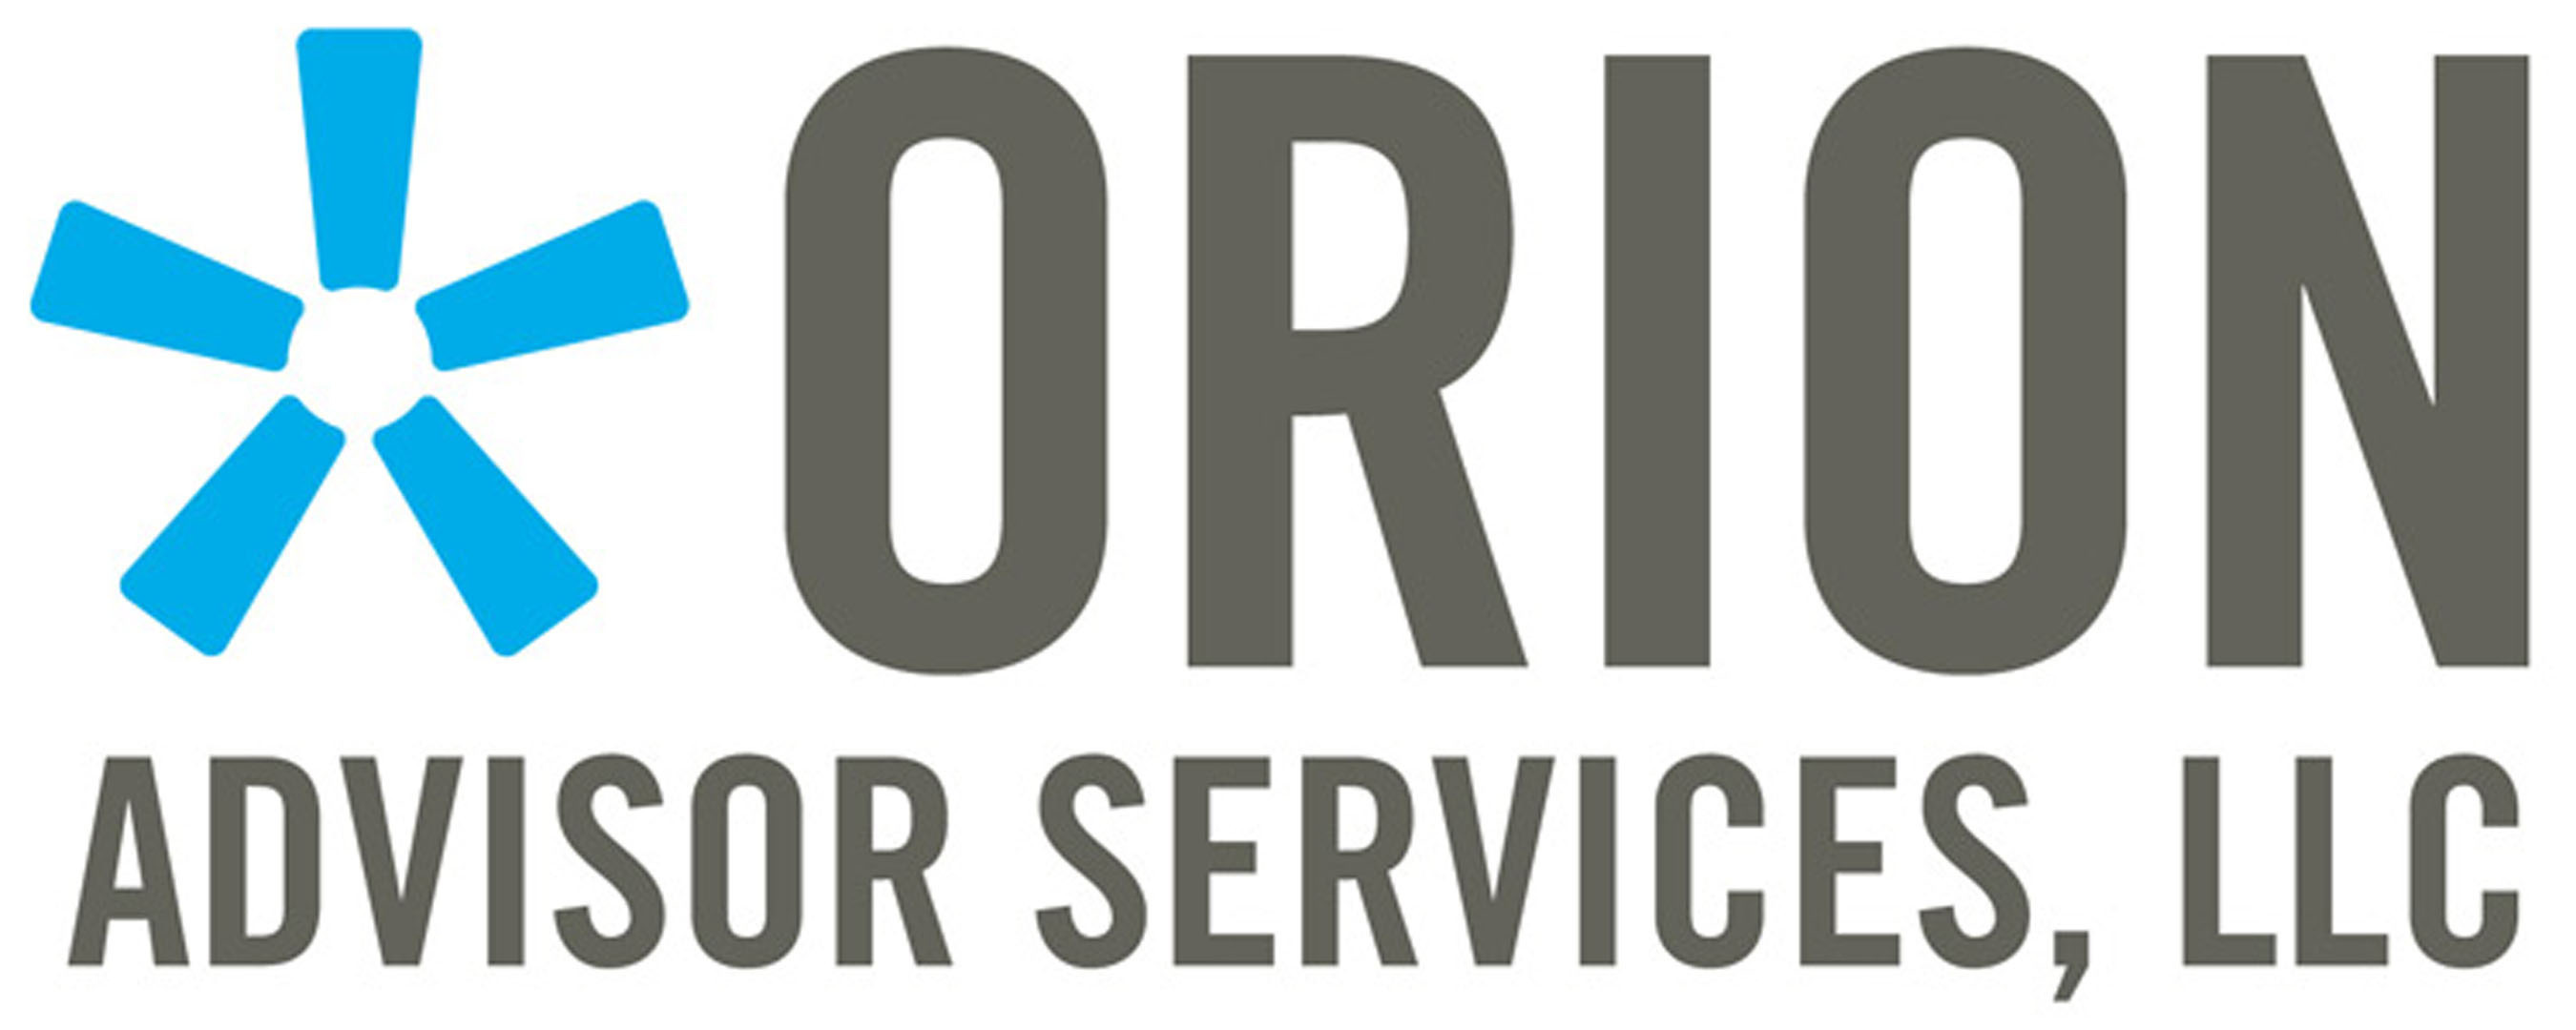 Orion Advisor Services, LLC. (PRNewsFoto/Orion Advisor Services, LLC) (PRNewsFoto/ORION ADVISOR SERVICES, LLC)